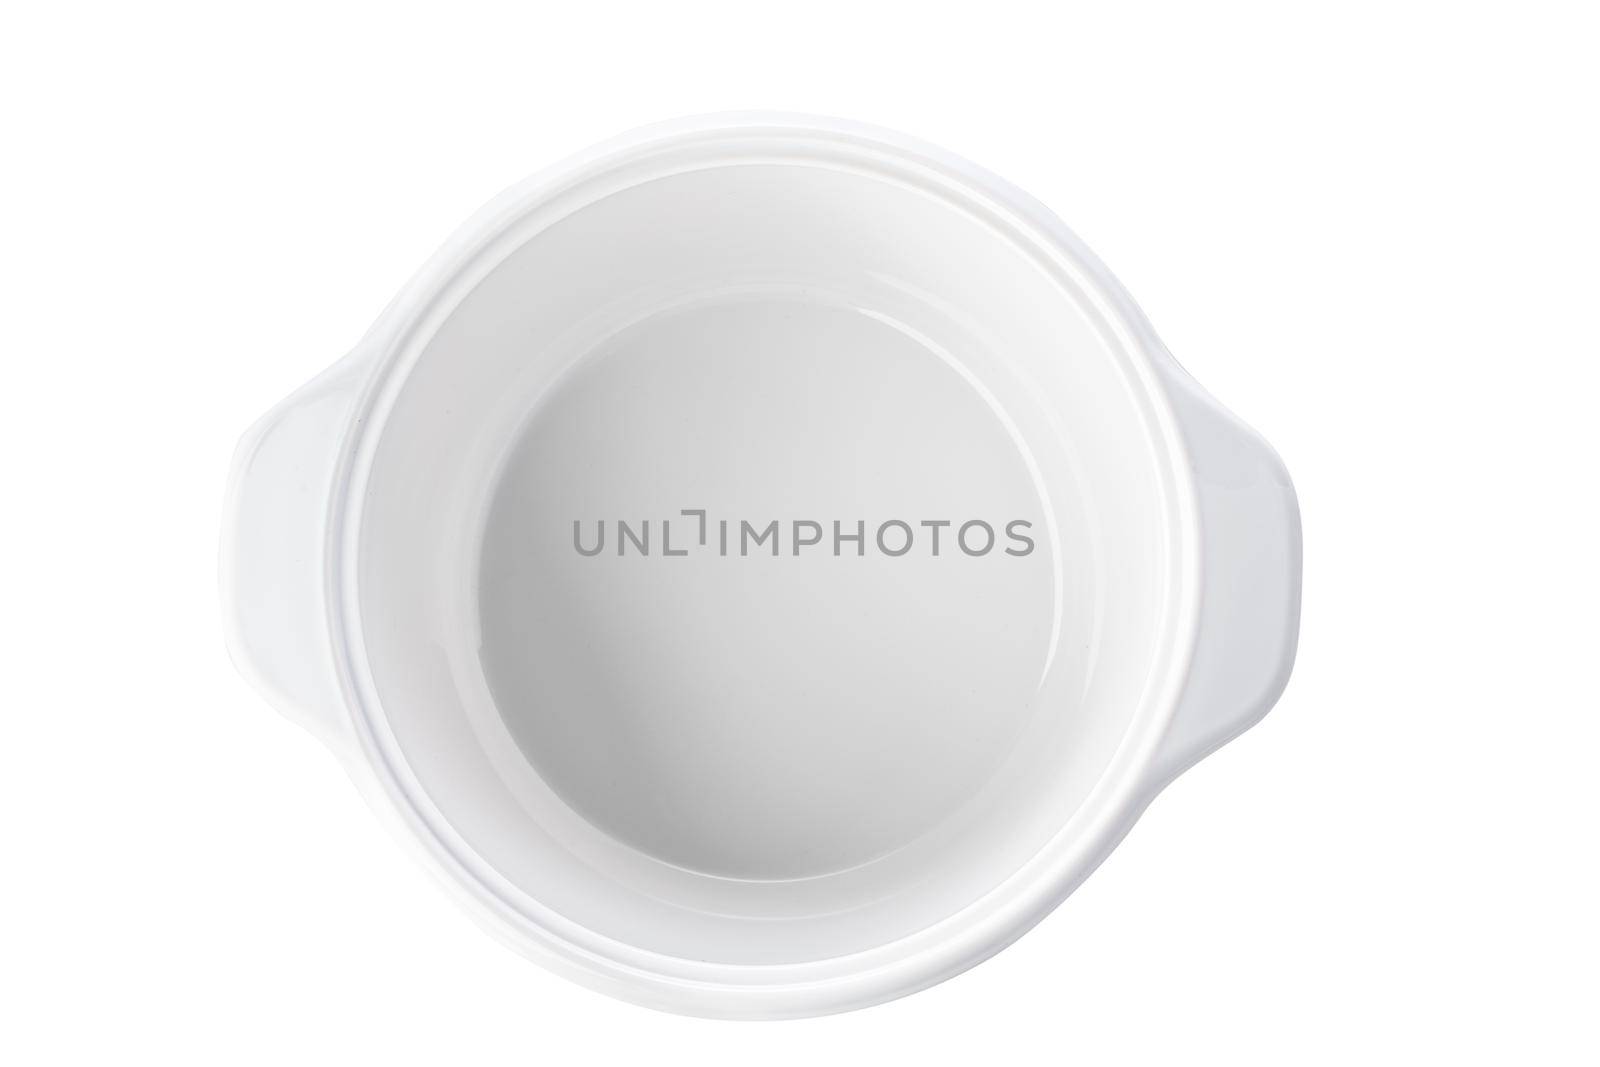 White ceramic plate isolated on white background by Fabrikasimf